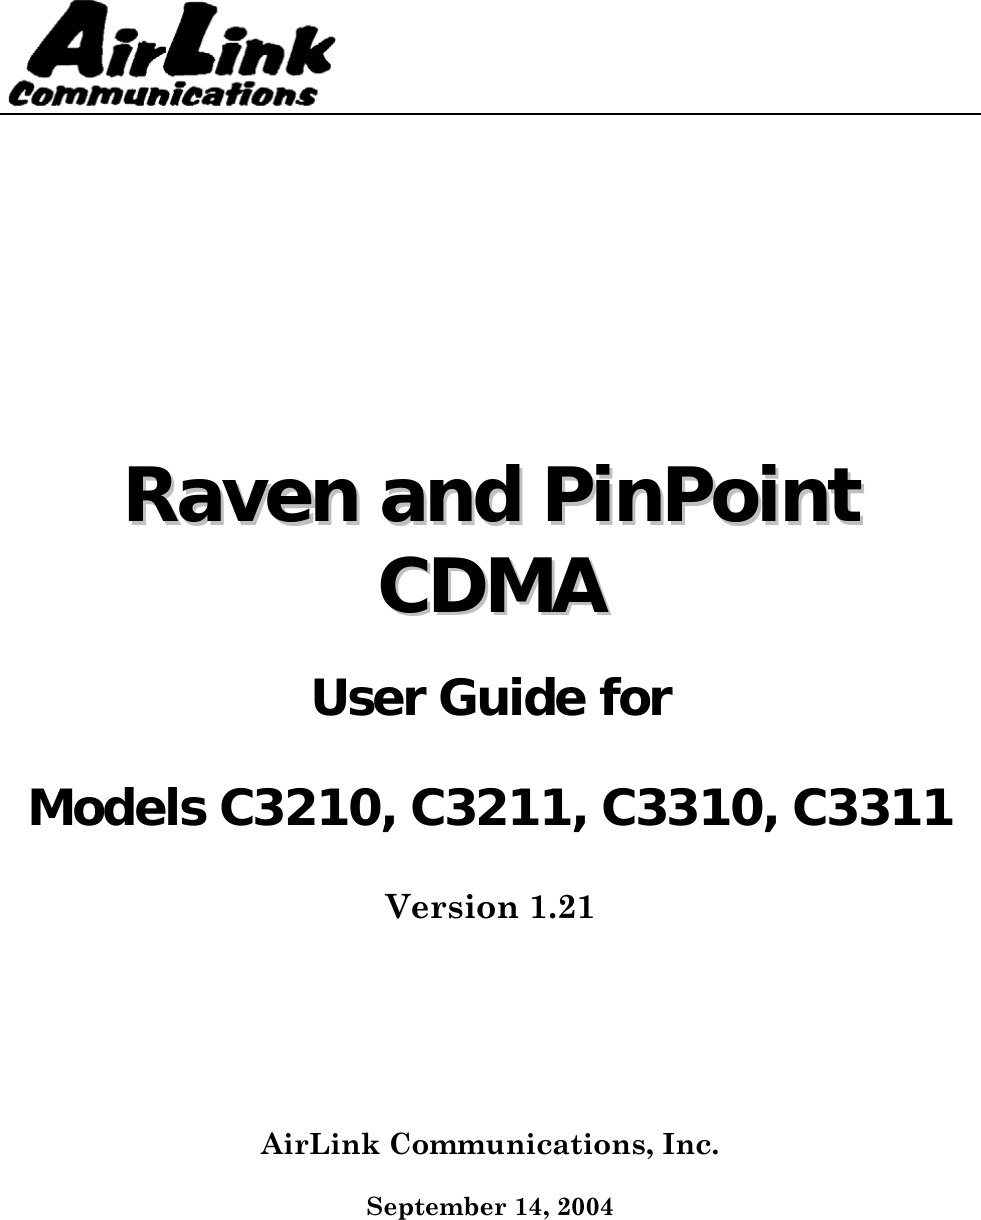       RRaavveenn  aanndd  PPiinnPPooiinntt  CCDDMMAA  User Guide for Models C3210, C3211, C3310, C3311 Version 1.21 AirLink Communications, Inc.  September 14, 2004  